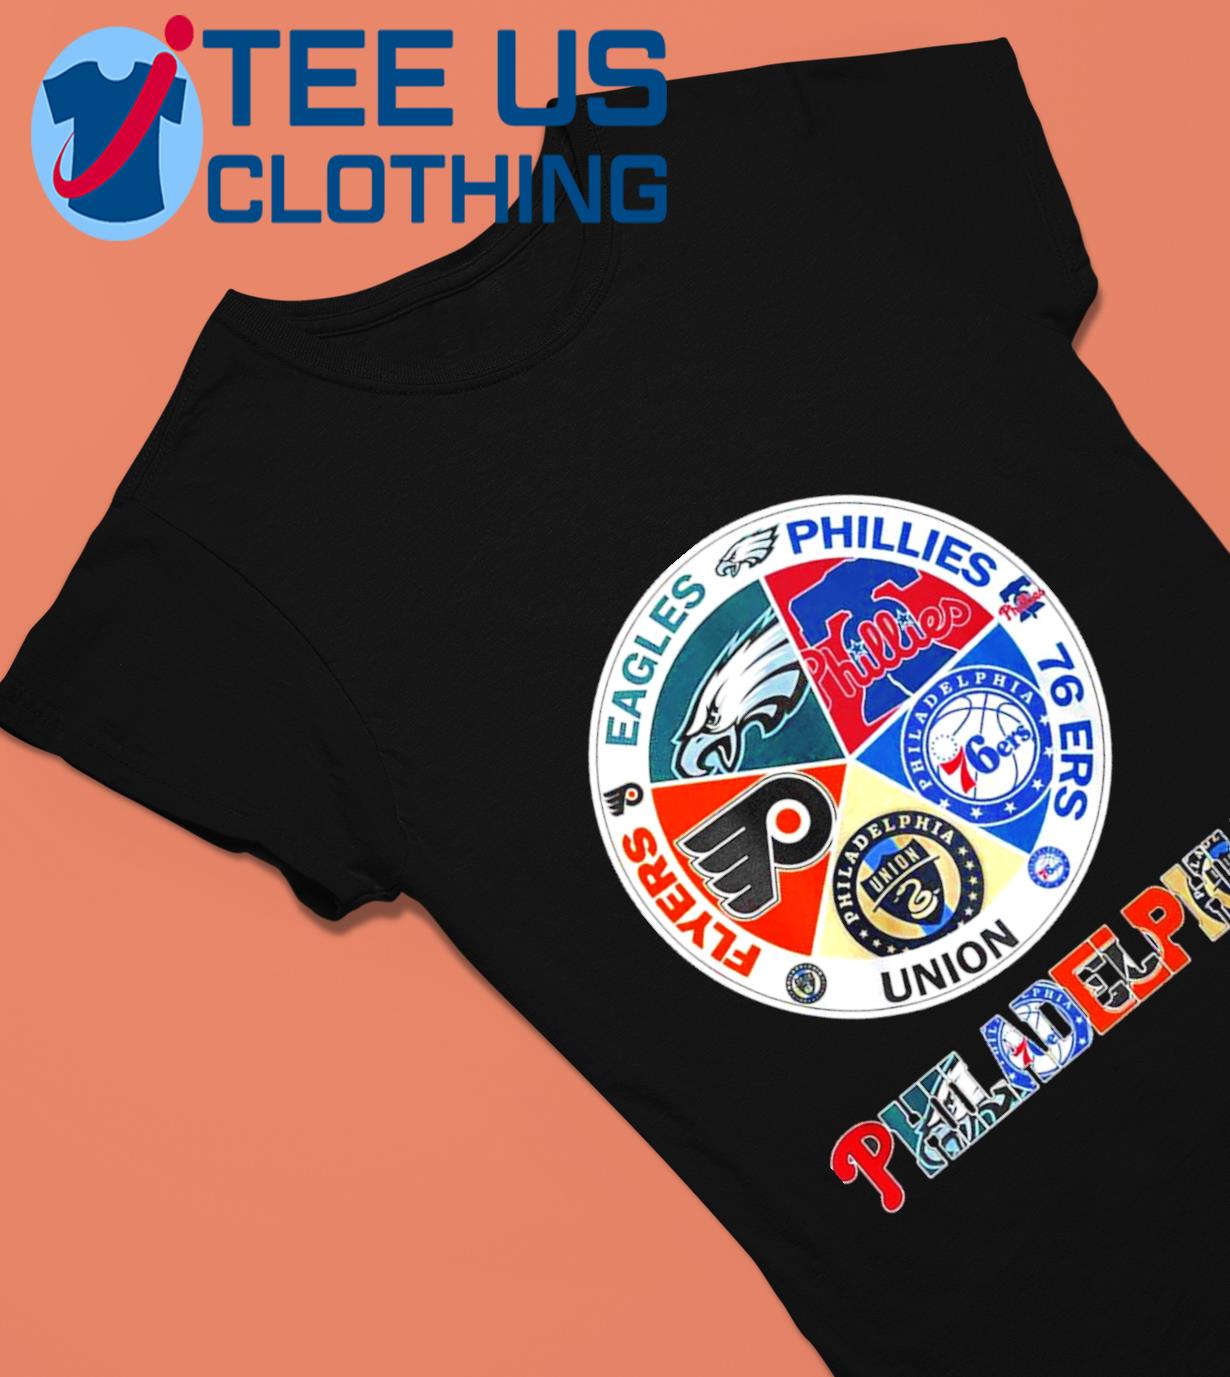 Philadelphia Flyers 76ers Phillies logo mashup shirt